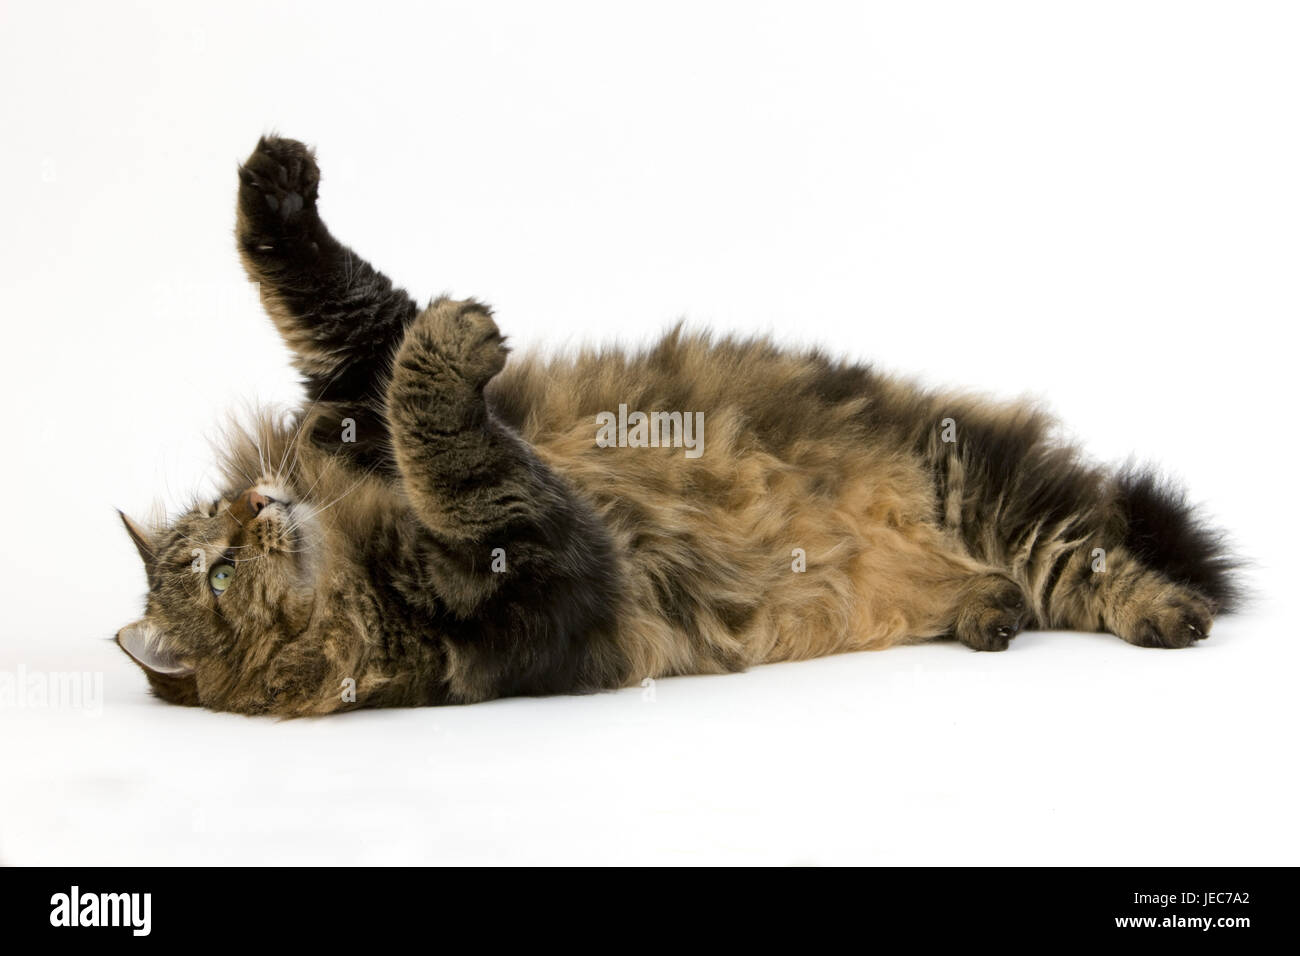 Angora cat, Stock Photo